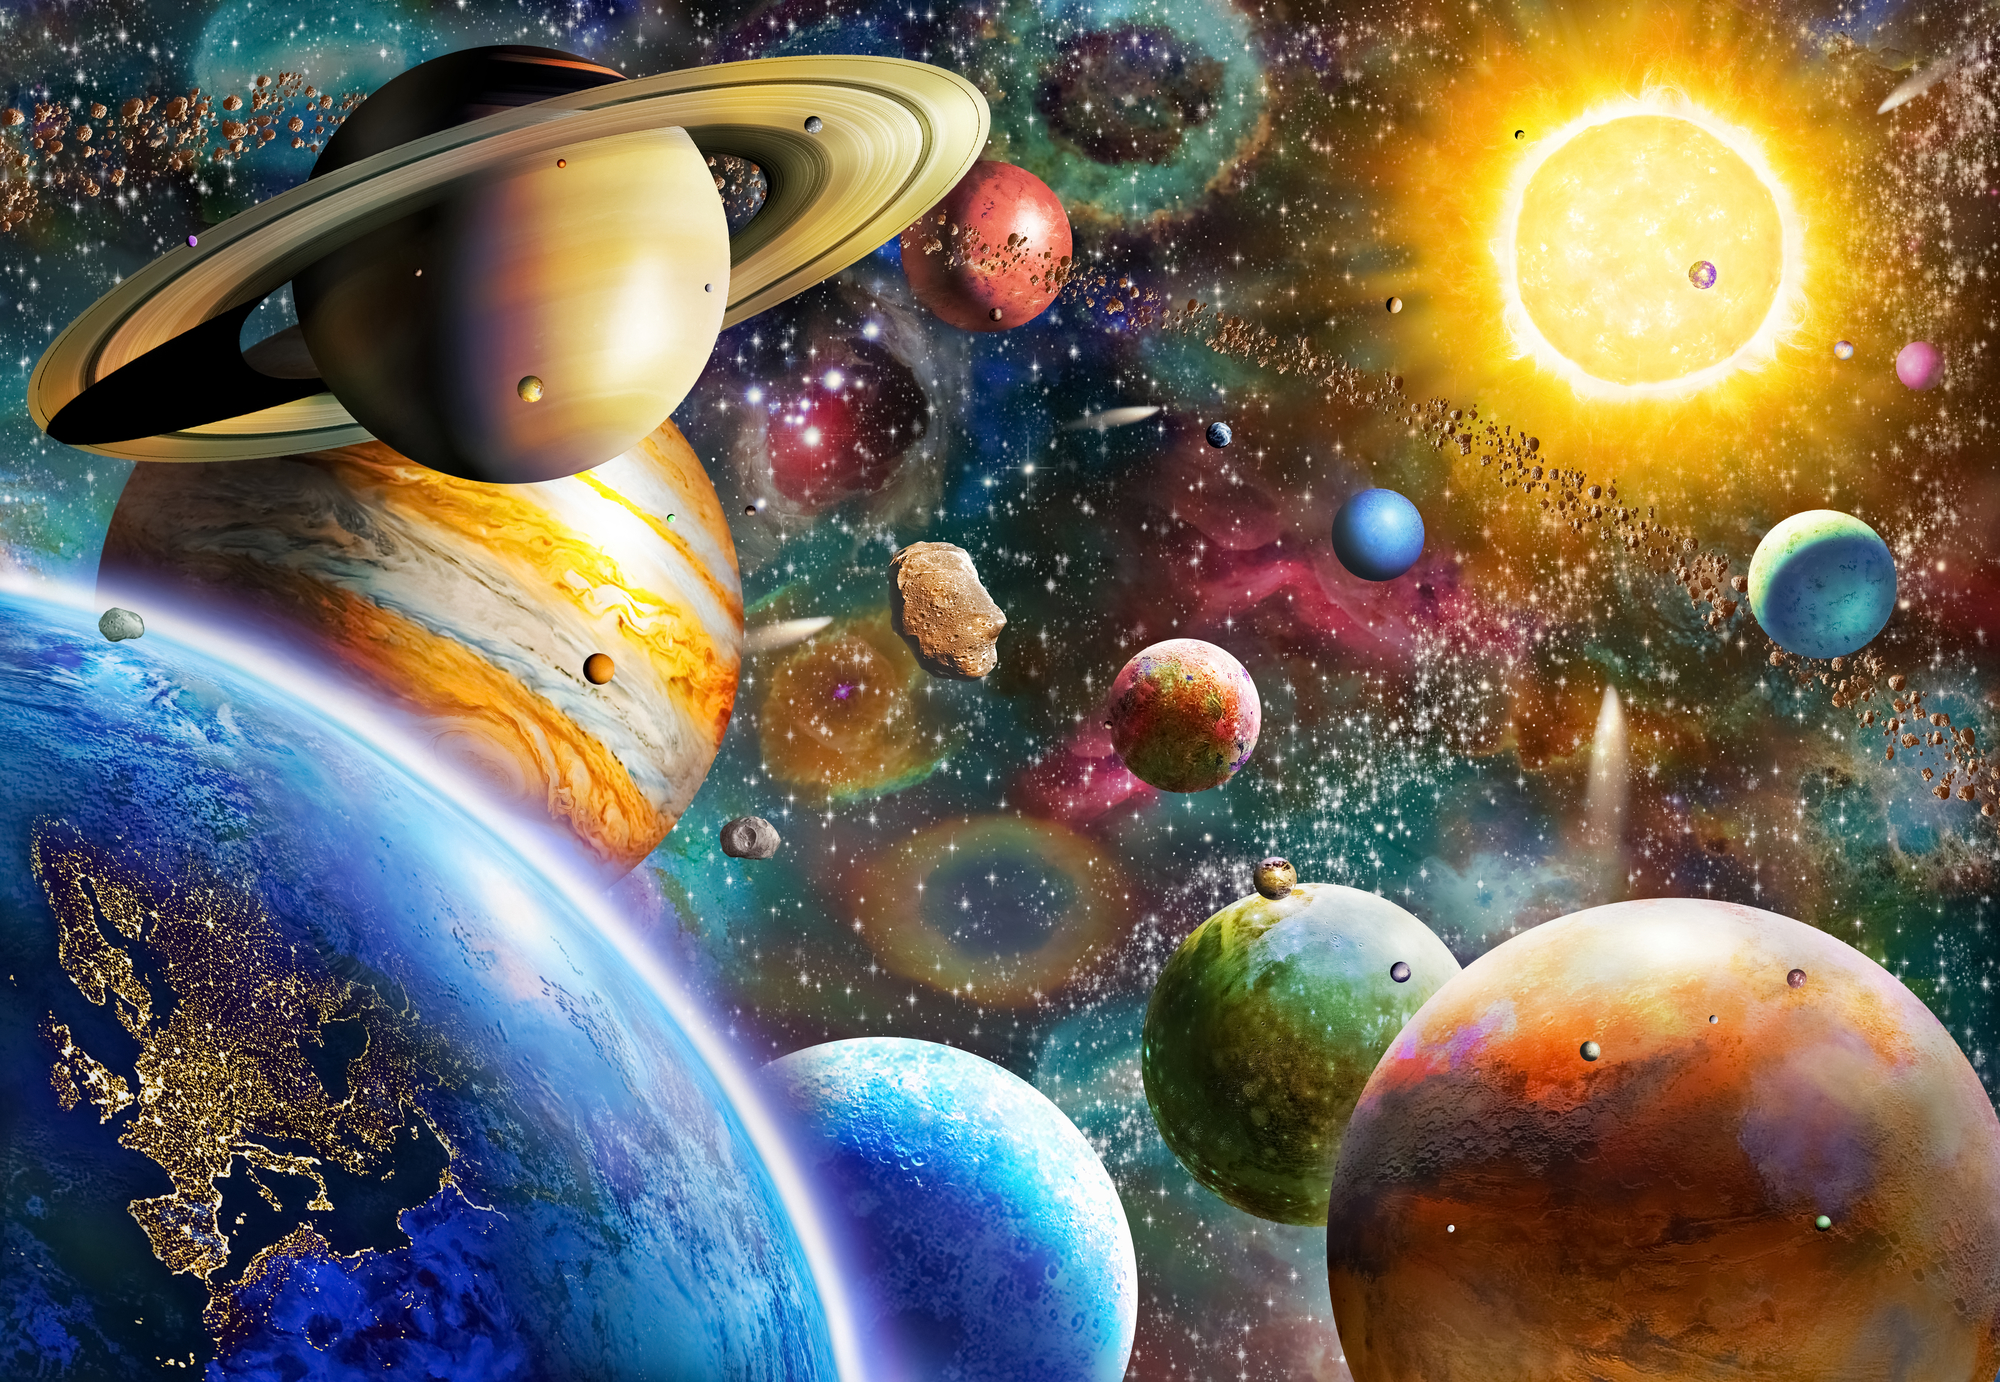 Planets In Space Wallpaper Wallsauce Uk 5292